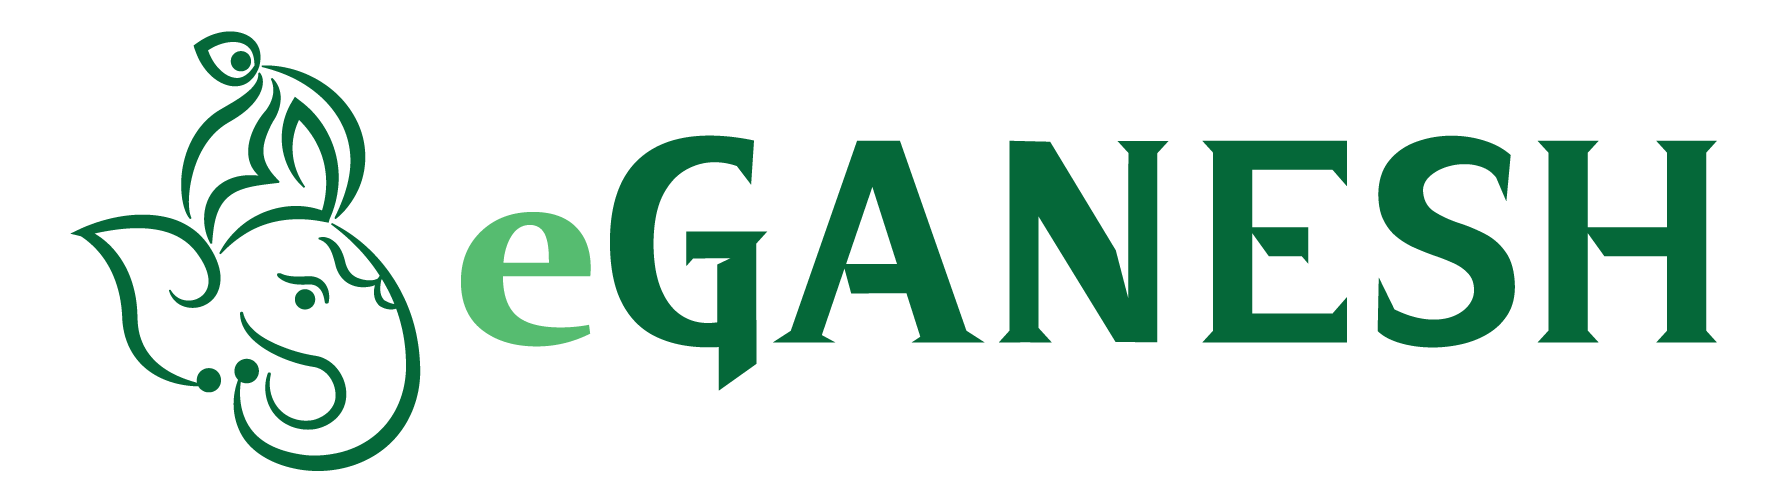 Ganesh name logo - YouTube